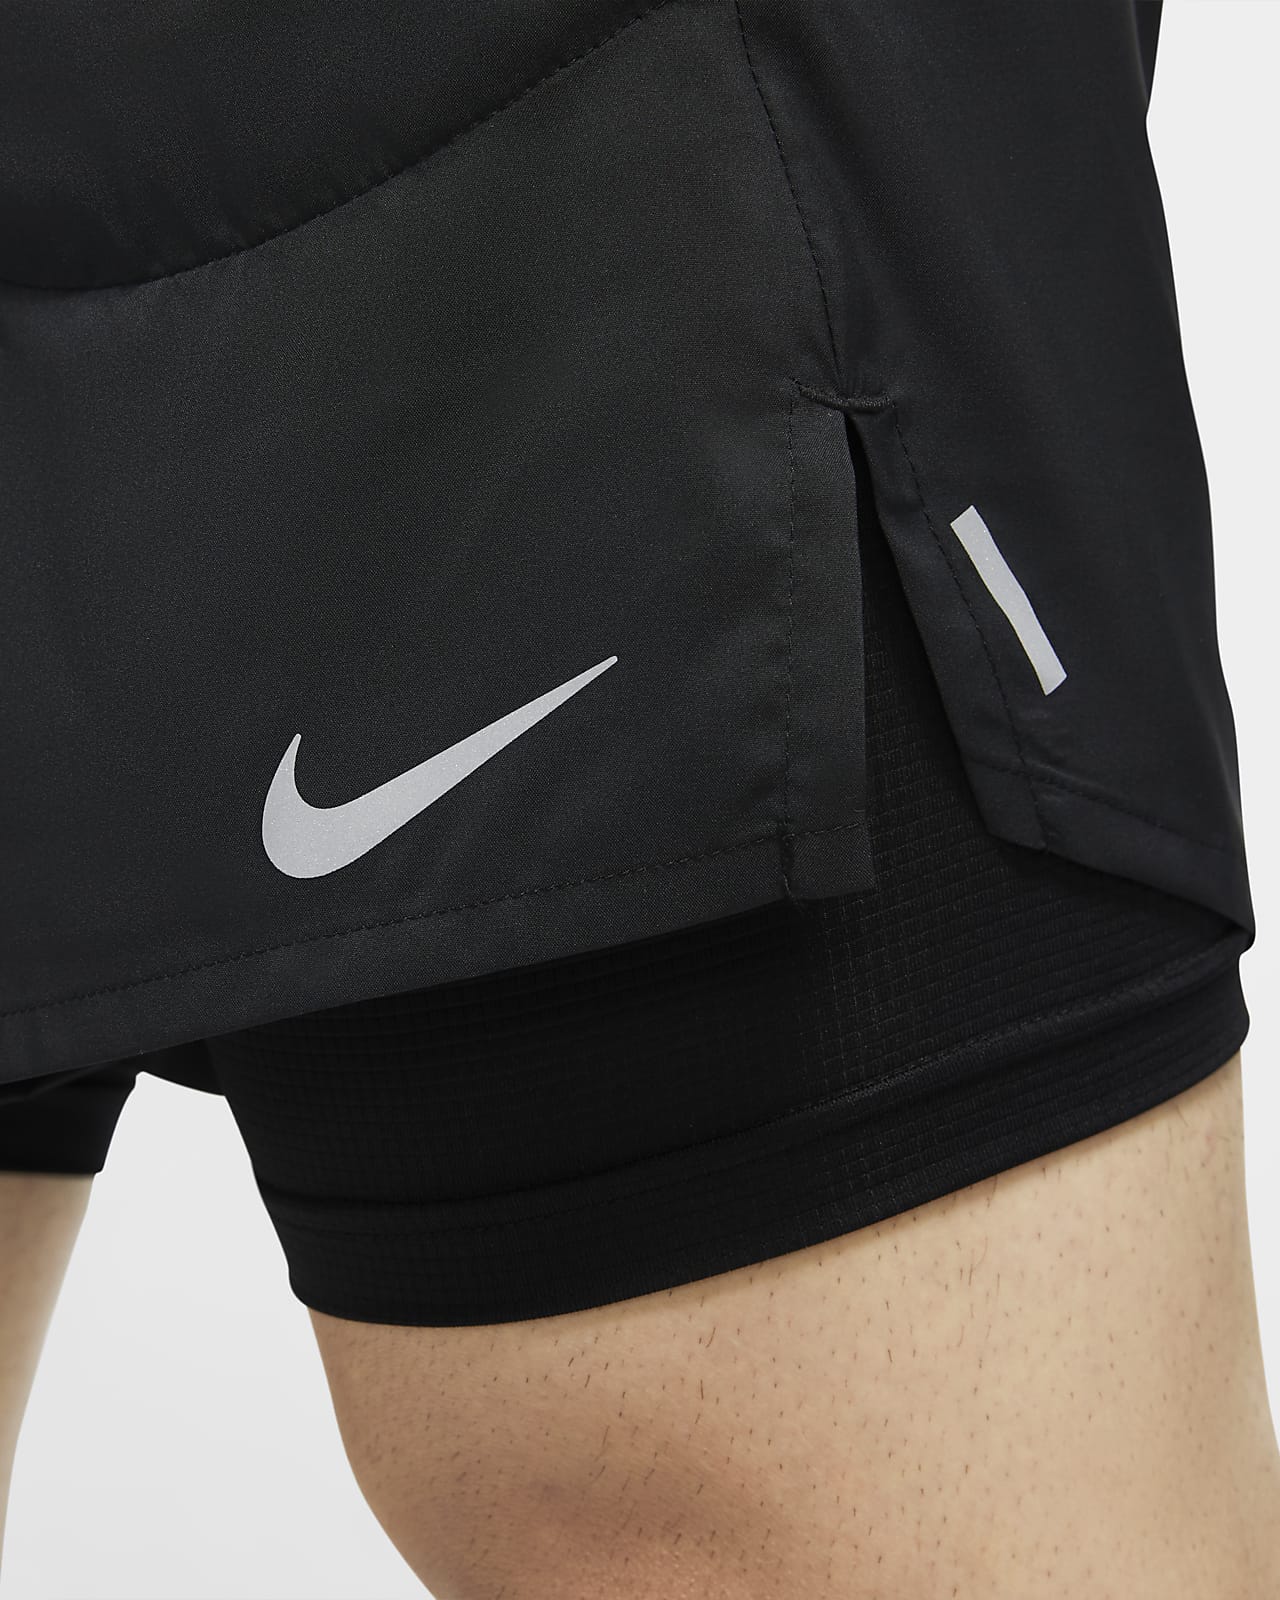 nike running flex stride 7 inch shorts in black